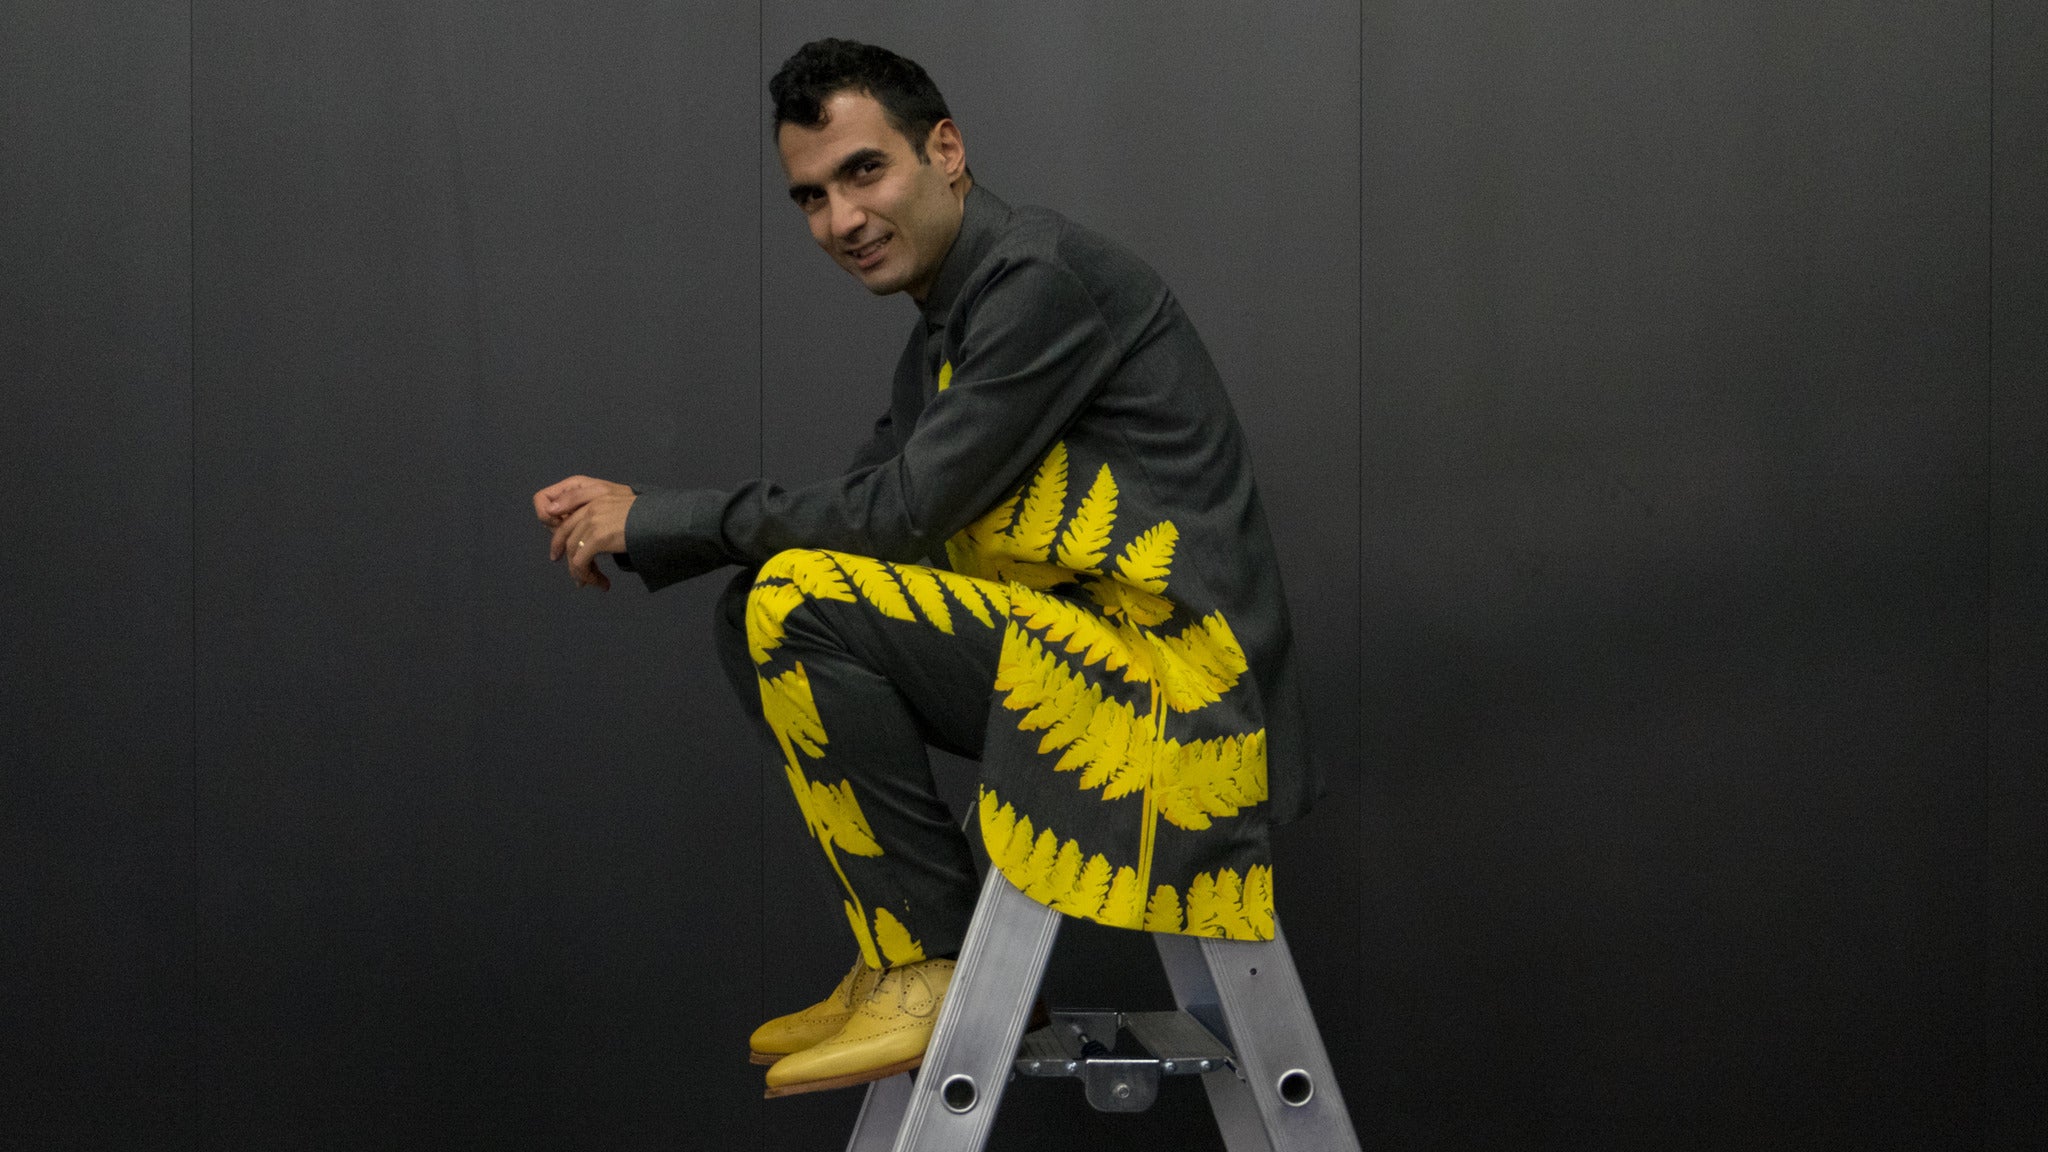 Tigran Hamasyan in New York promo photo for Music Geeks presale offer code